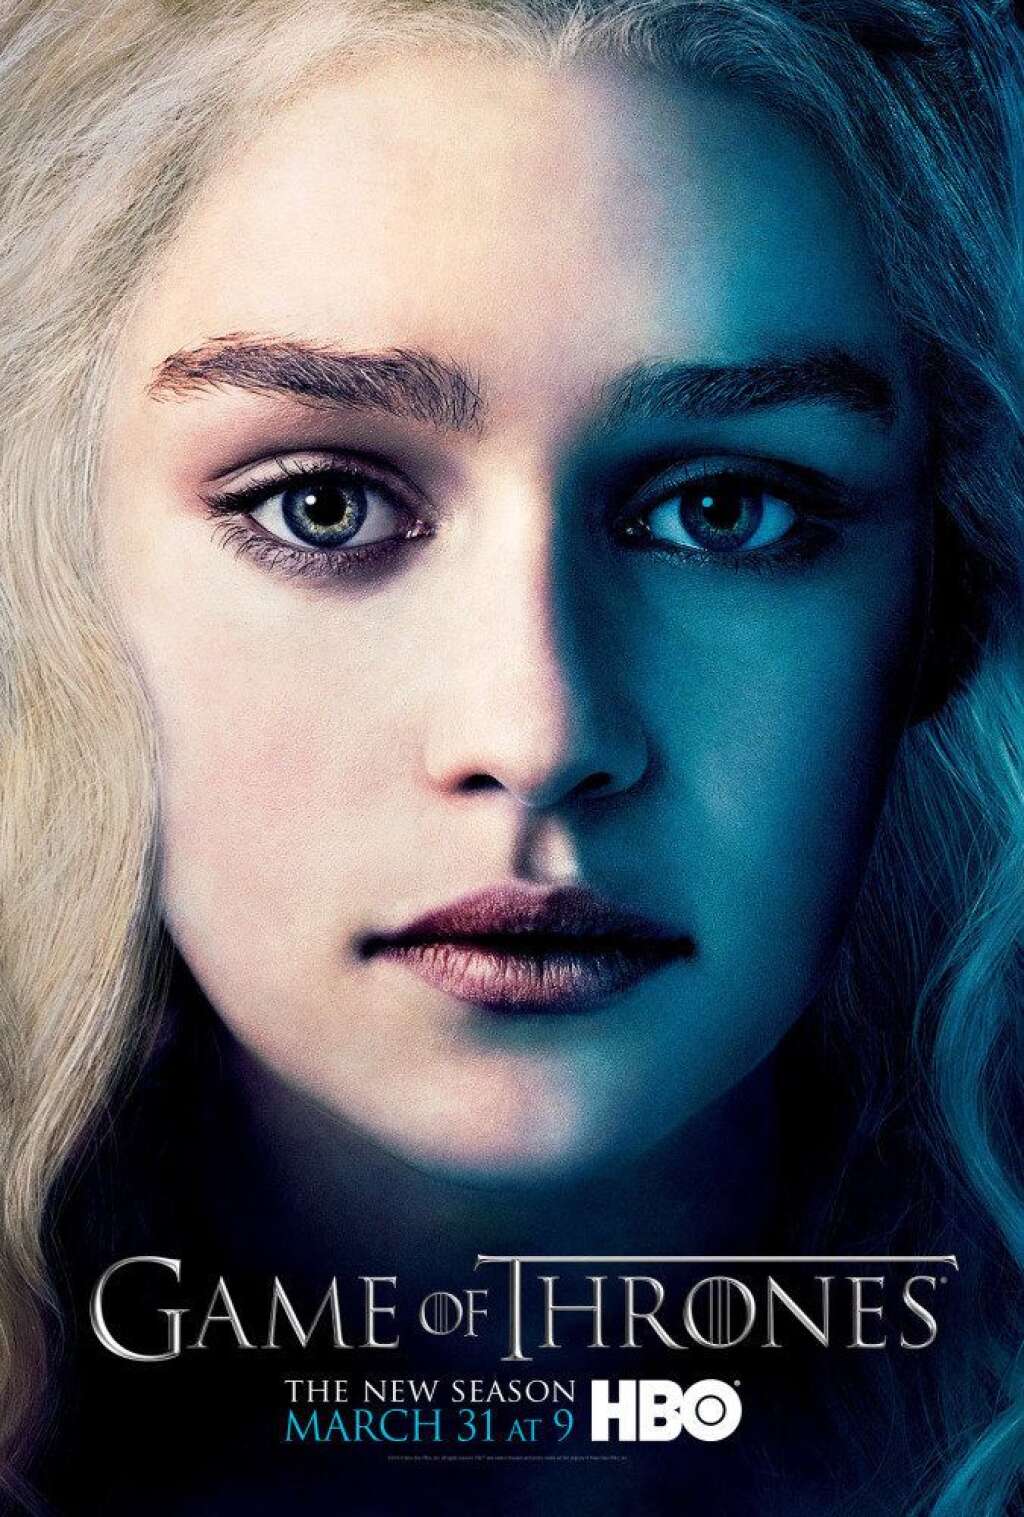 'Game of Thrones' Character Posters - Emilia Clarke as Daenerys Targaryen.